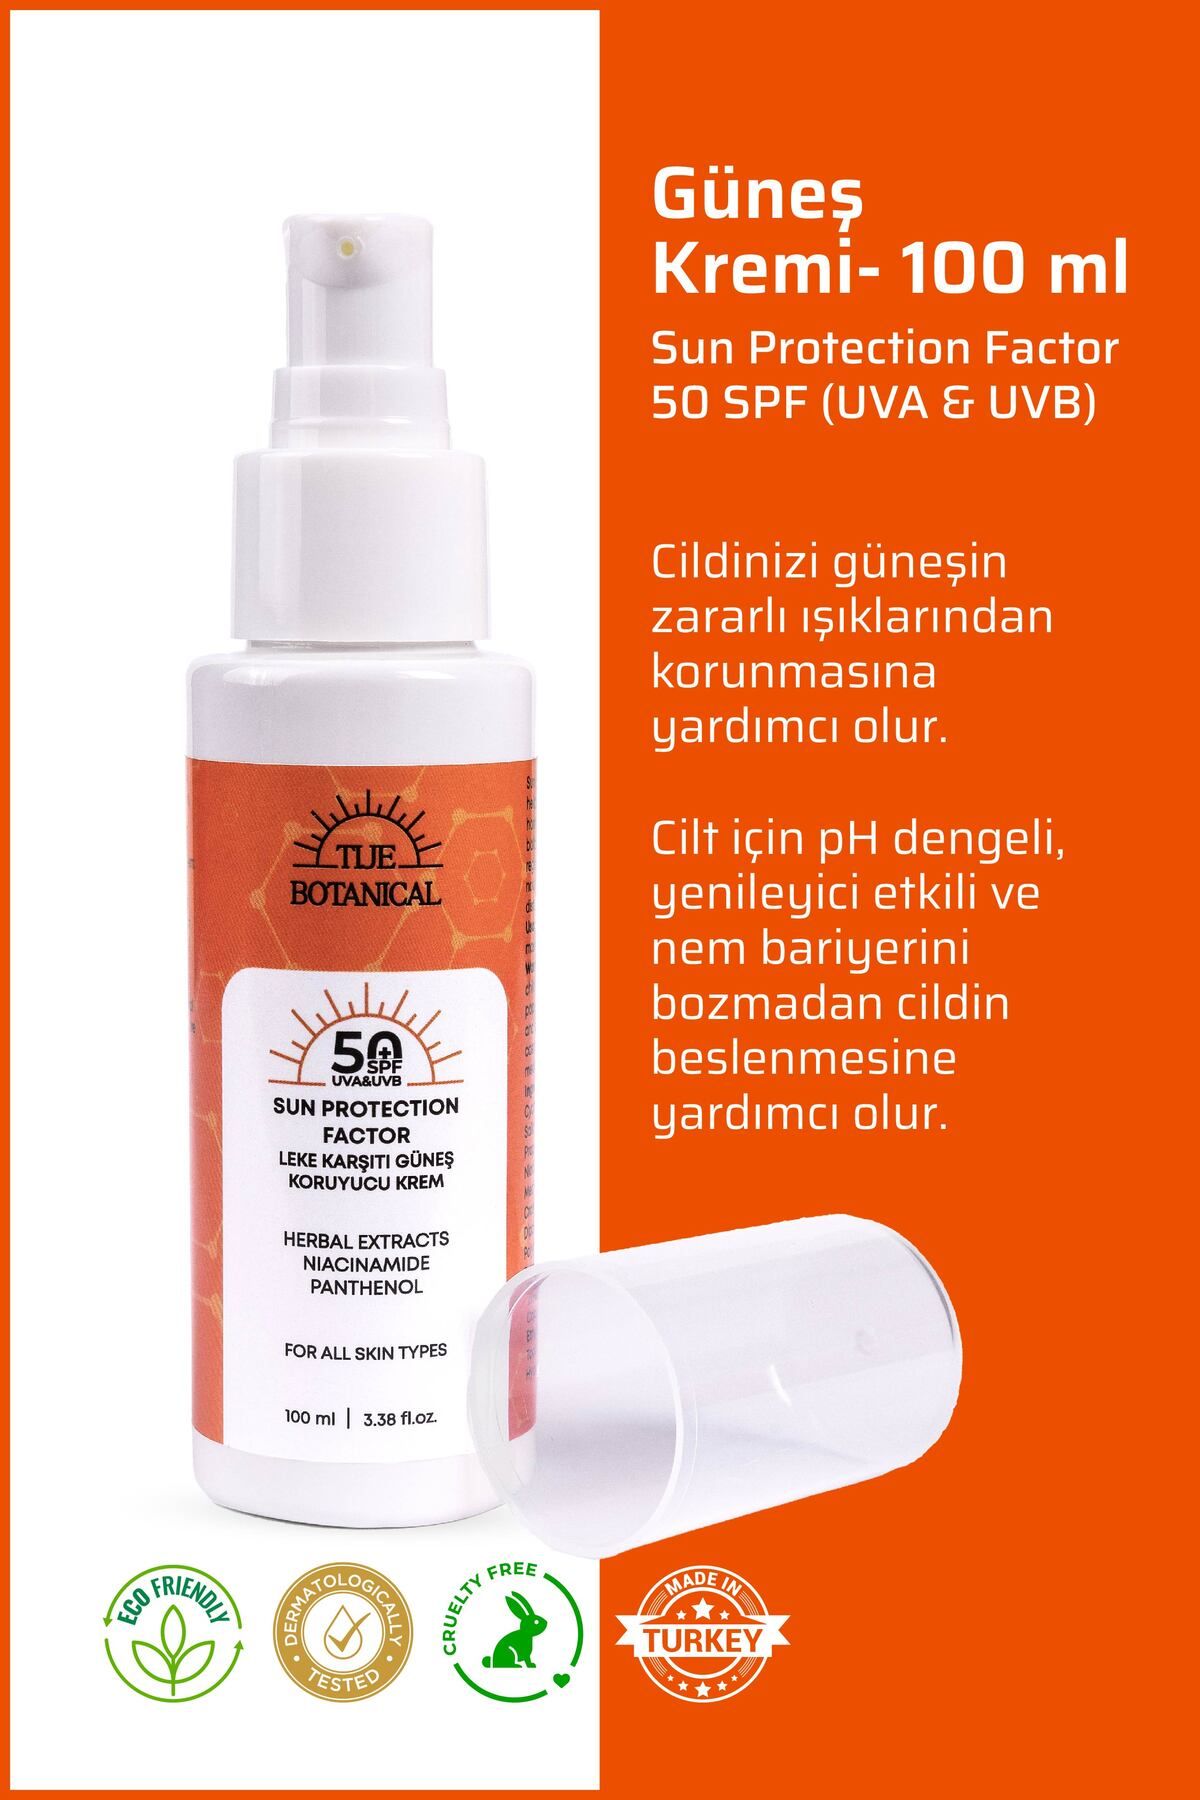 TİJE BOTANİCAL Güneş Kremi- 100 ml - Sun Protection Factor 50 SPF (UVA & UVB)